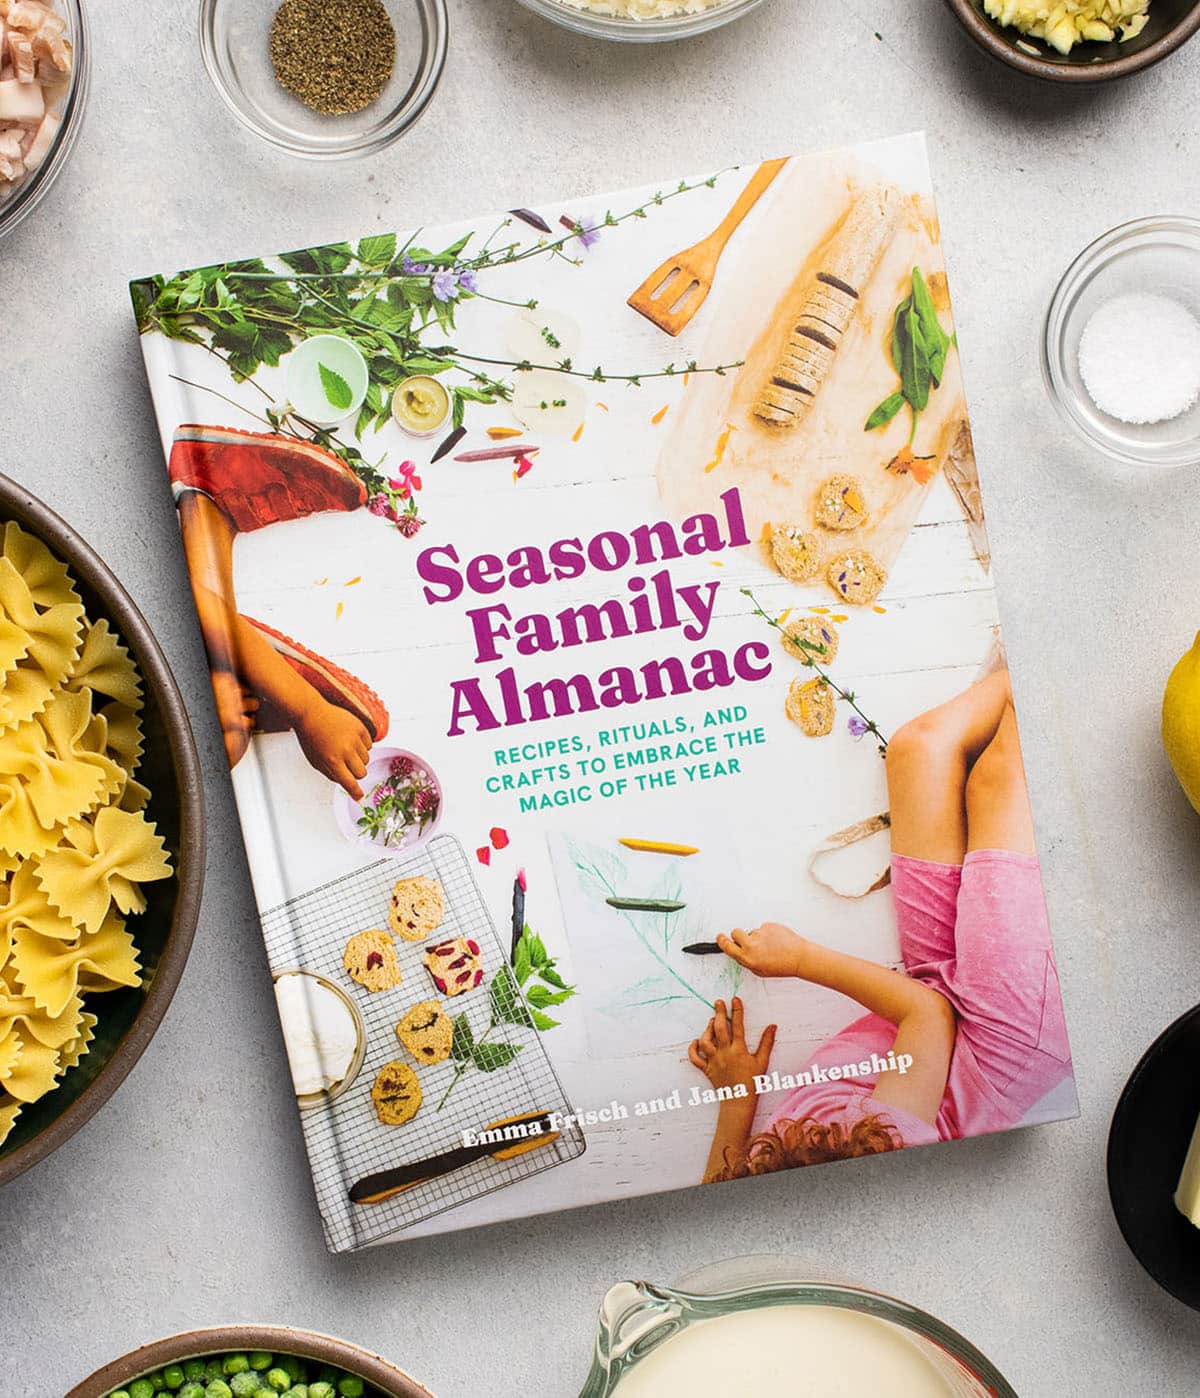 Seasonal family almanac cookbook on a white table.